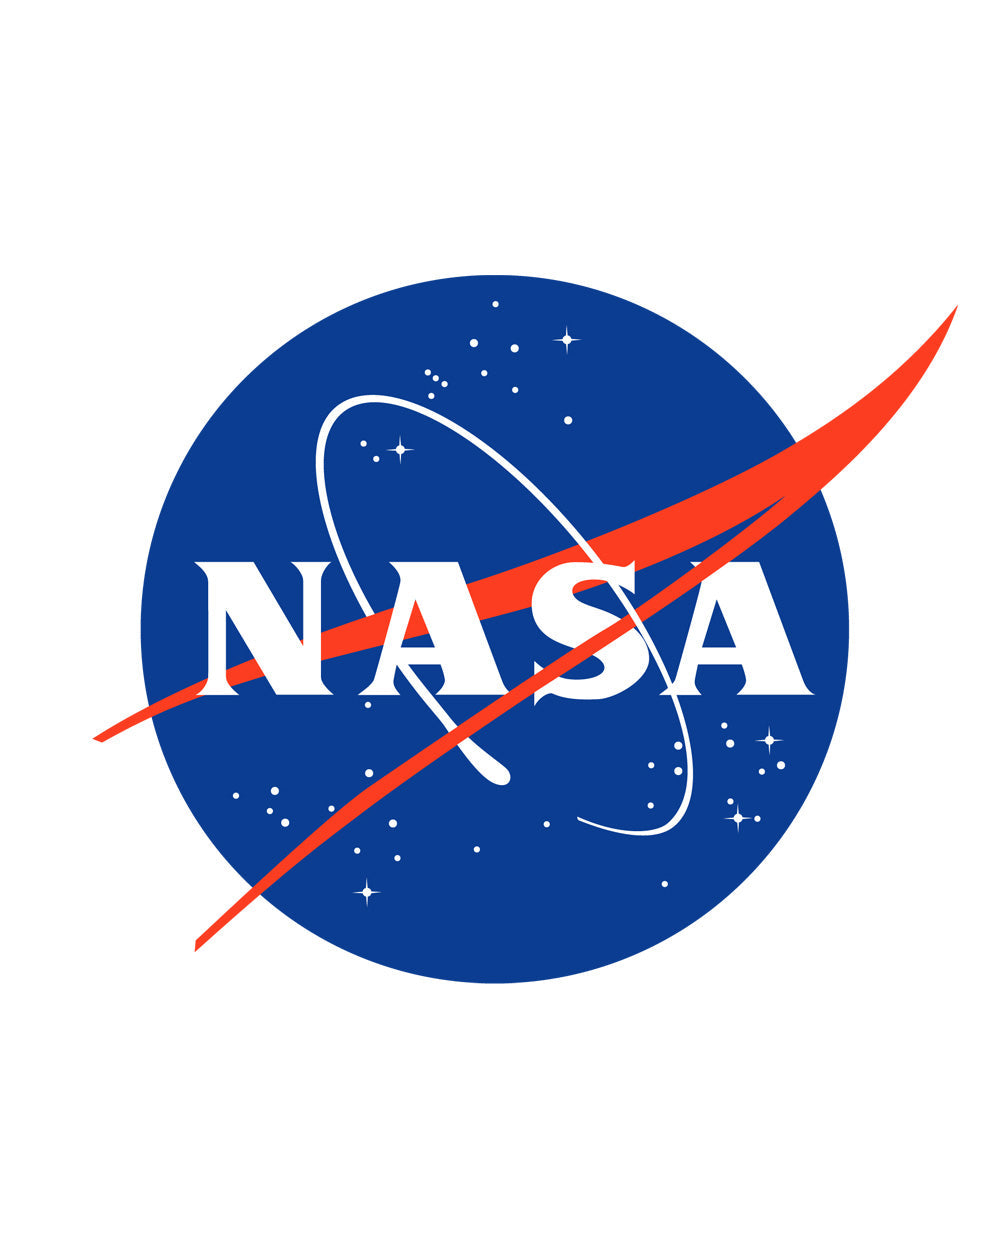 NASA Meatball Logo Mini Print USA Space Exploration Program Planets Solar System Geek Nerd Stripes Licensed T-Shirt